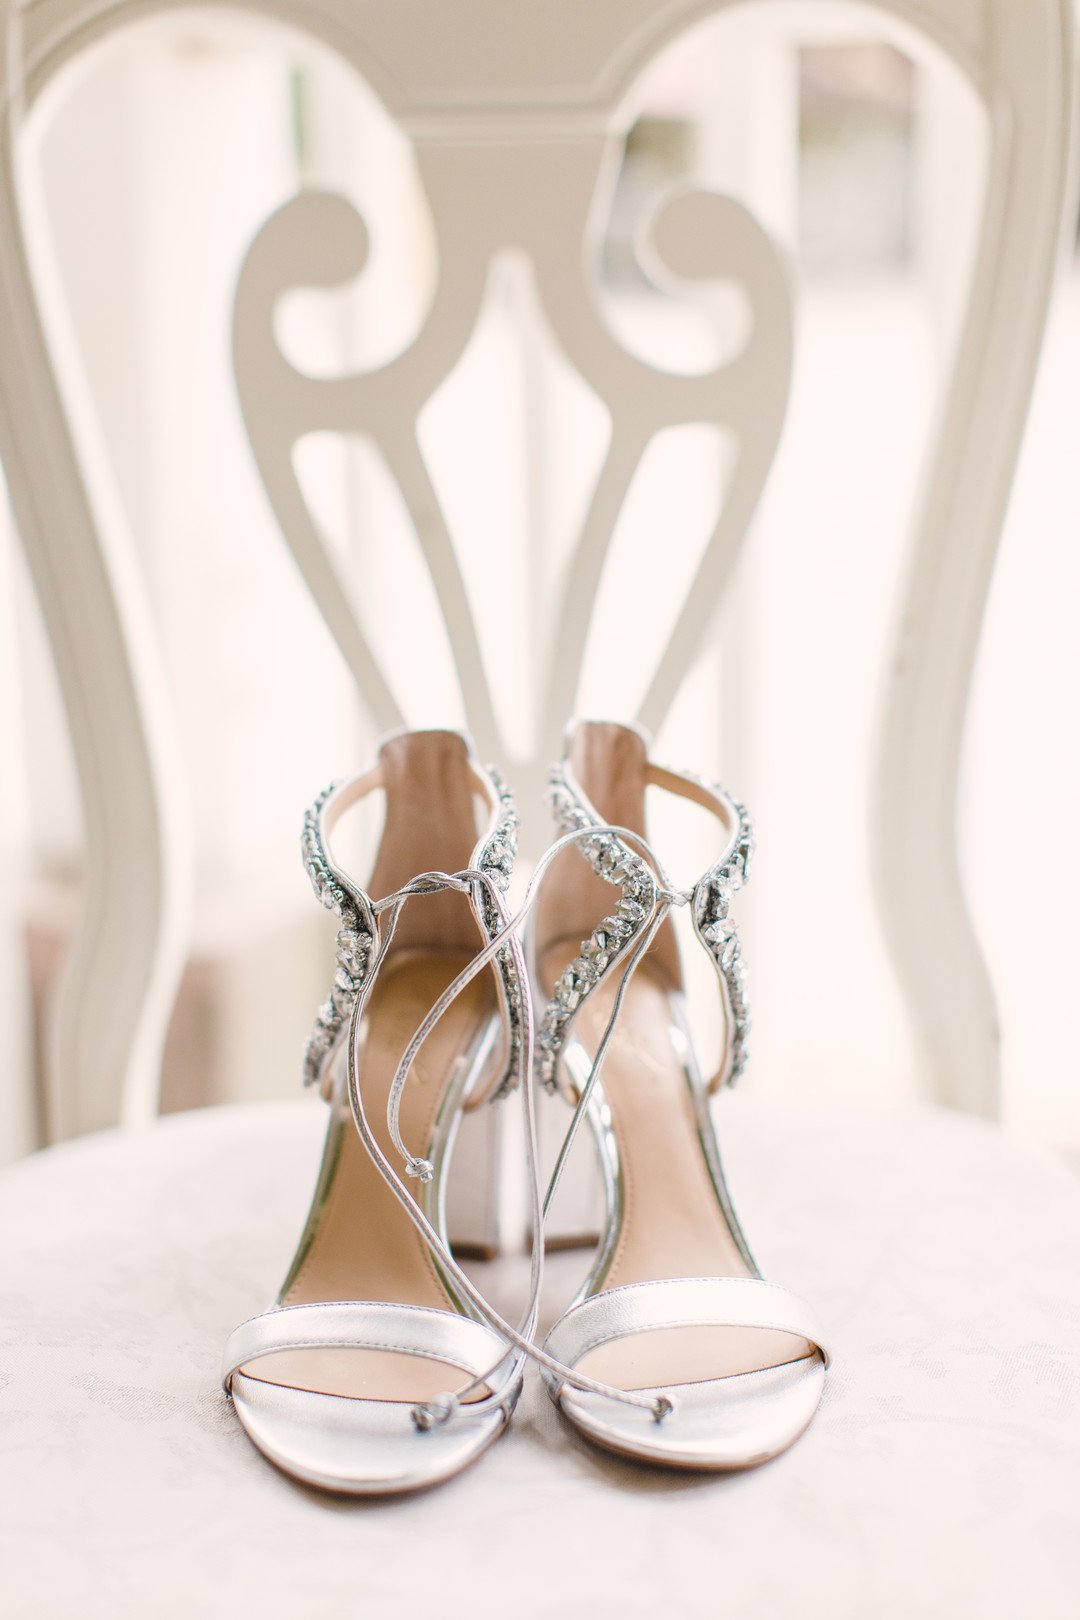 www.santabarbarawedding.com | Rancho San Antonio | Joanna Fisher | Bride's Shoes